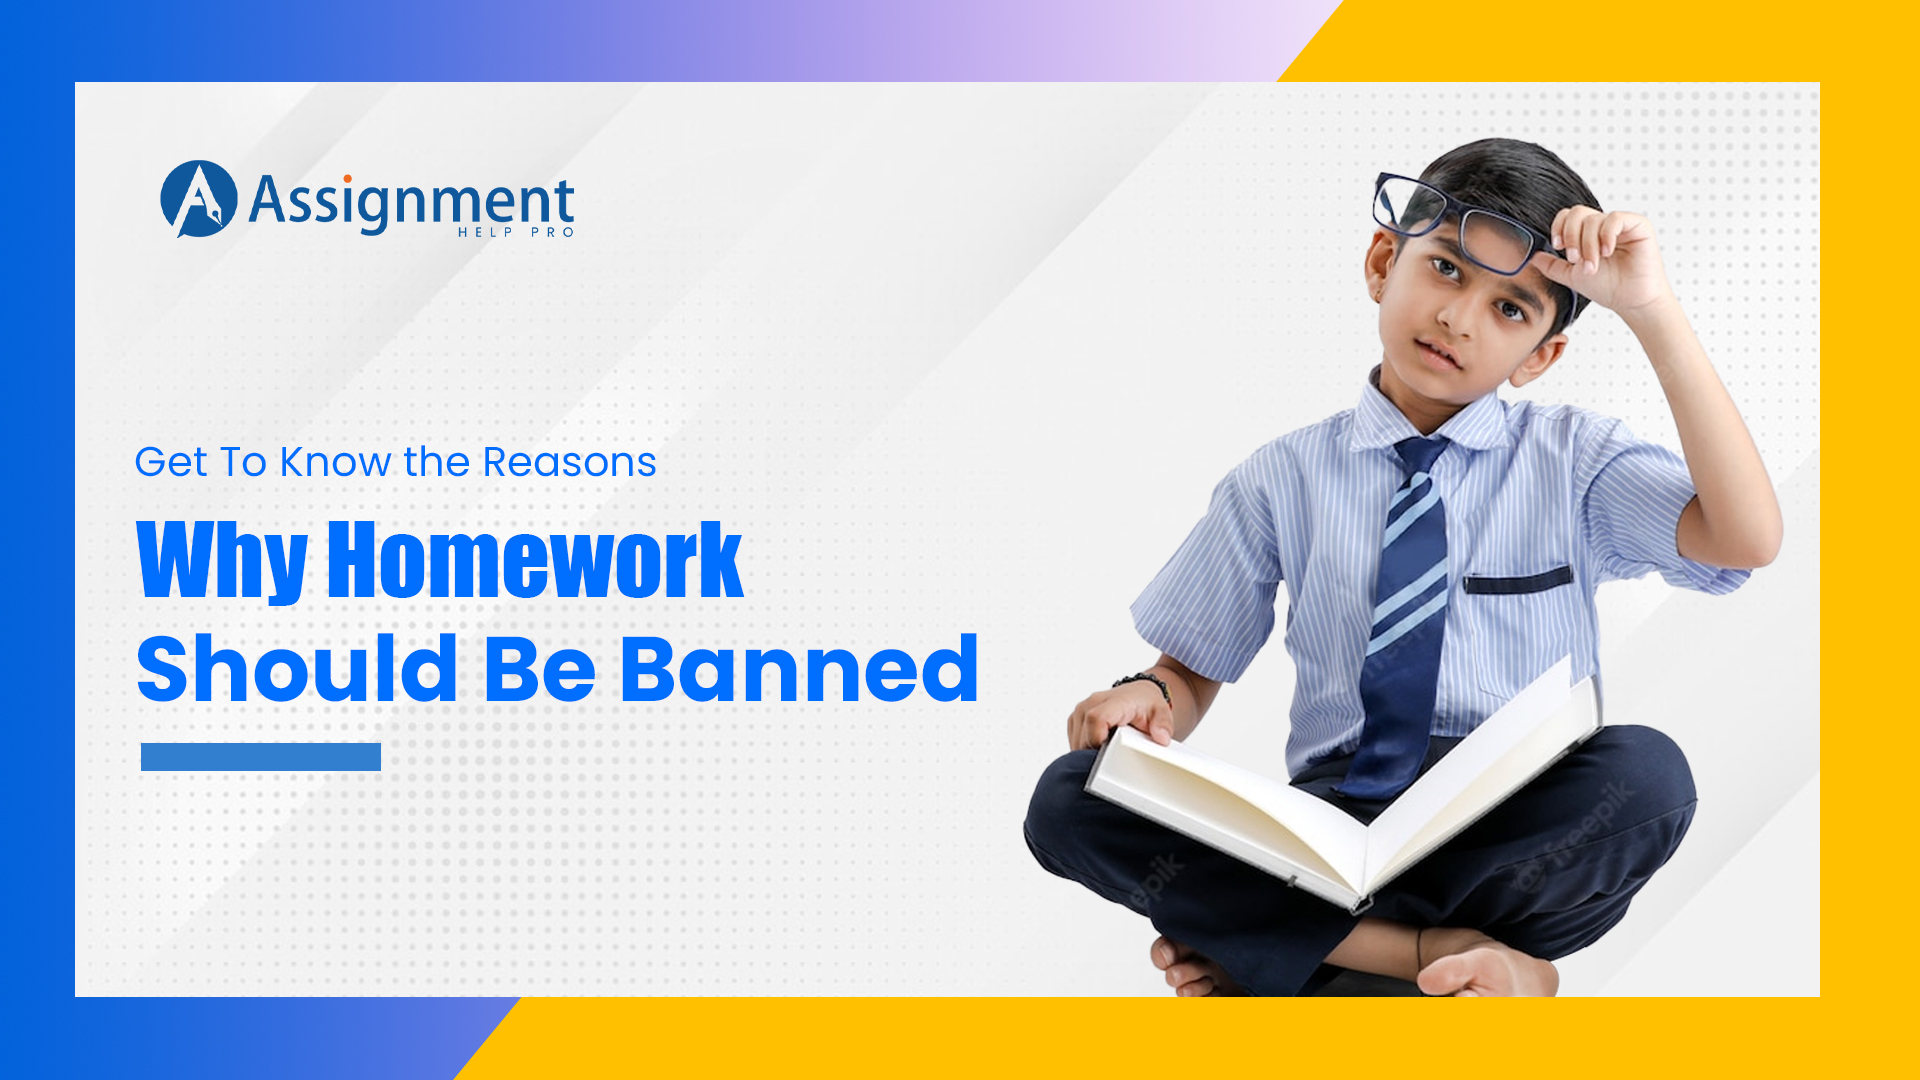 is homework banned in ireland yet